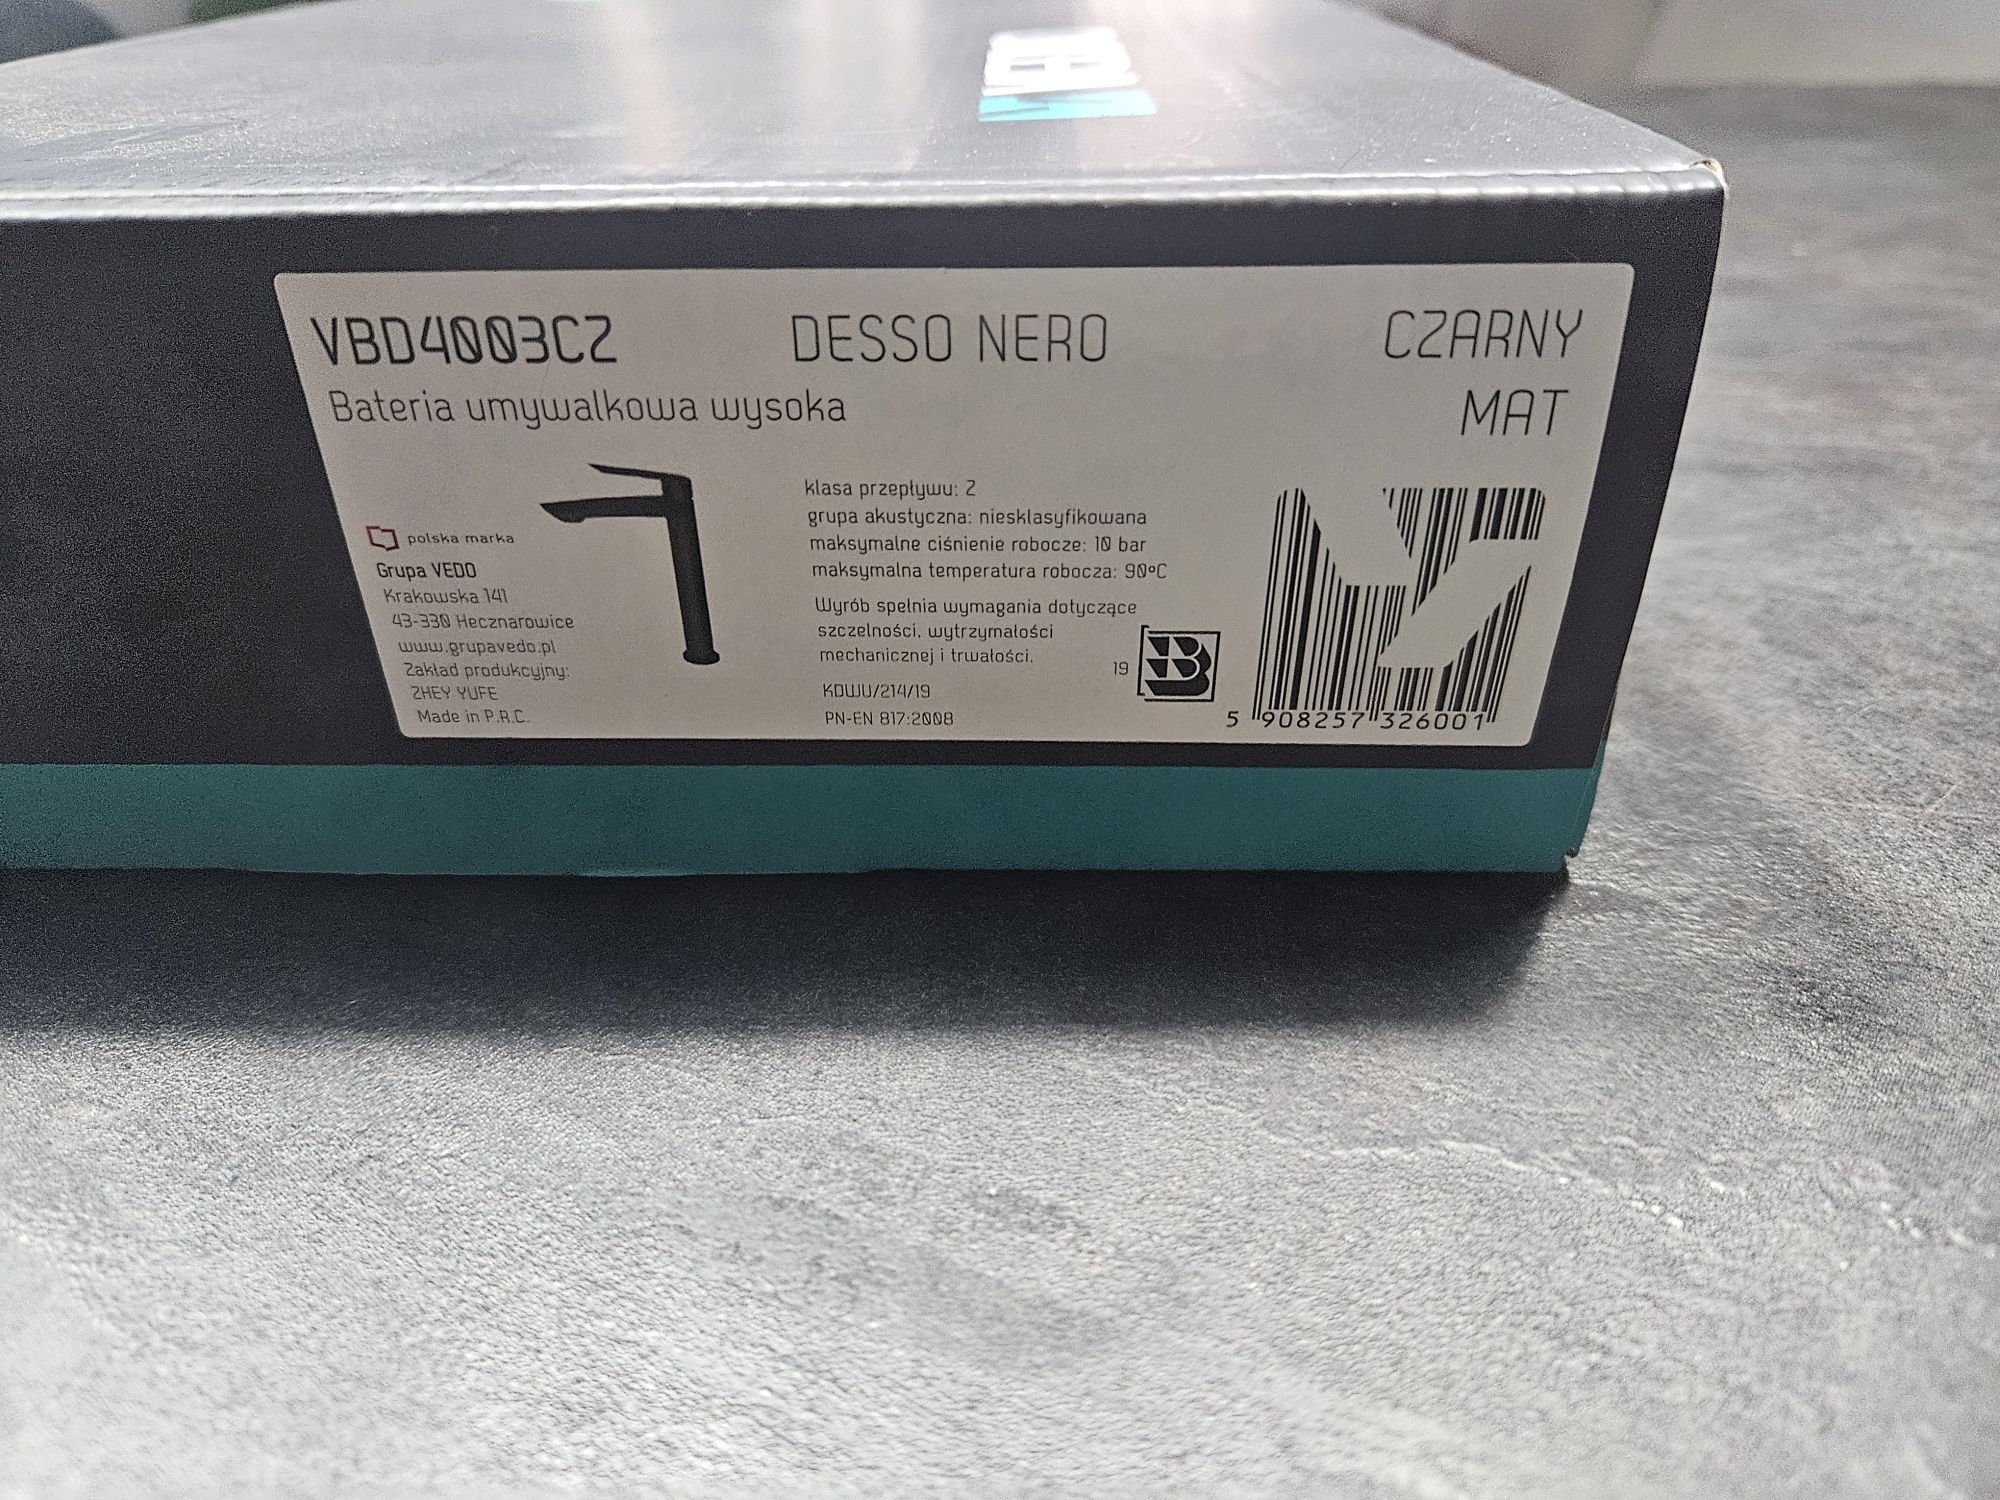 Bateria umywalkowa Vedo Desso Nero wysoka